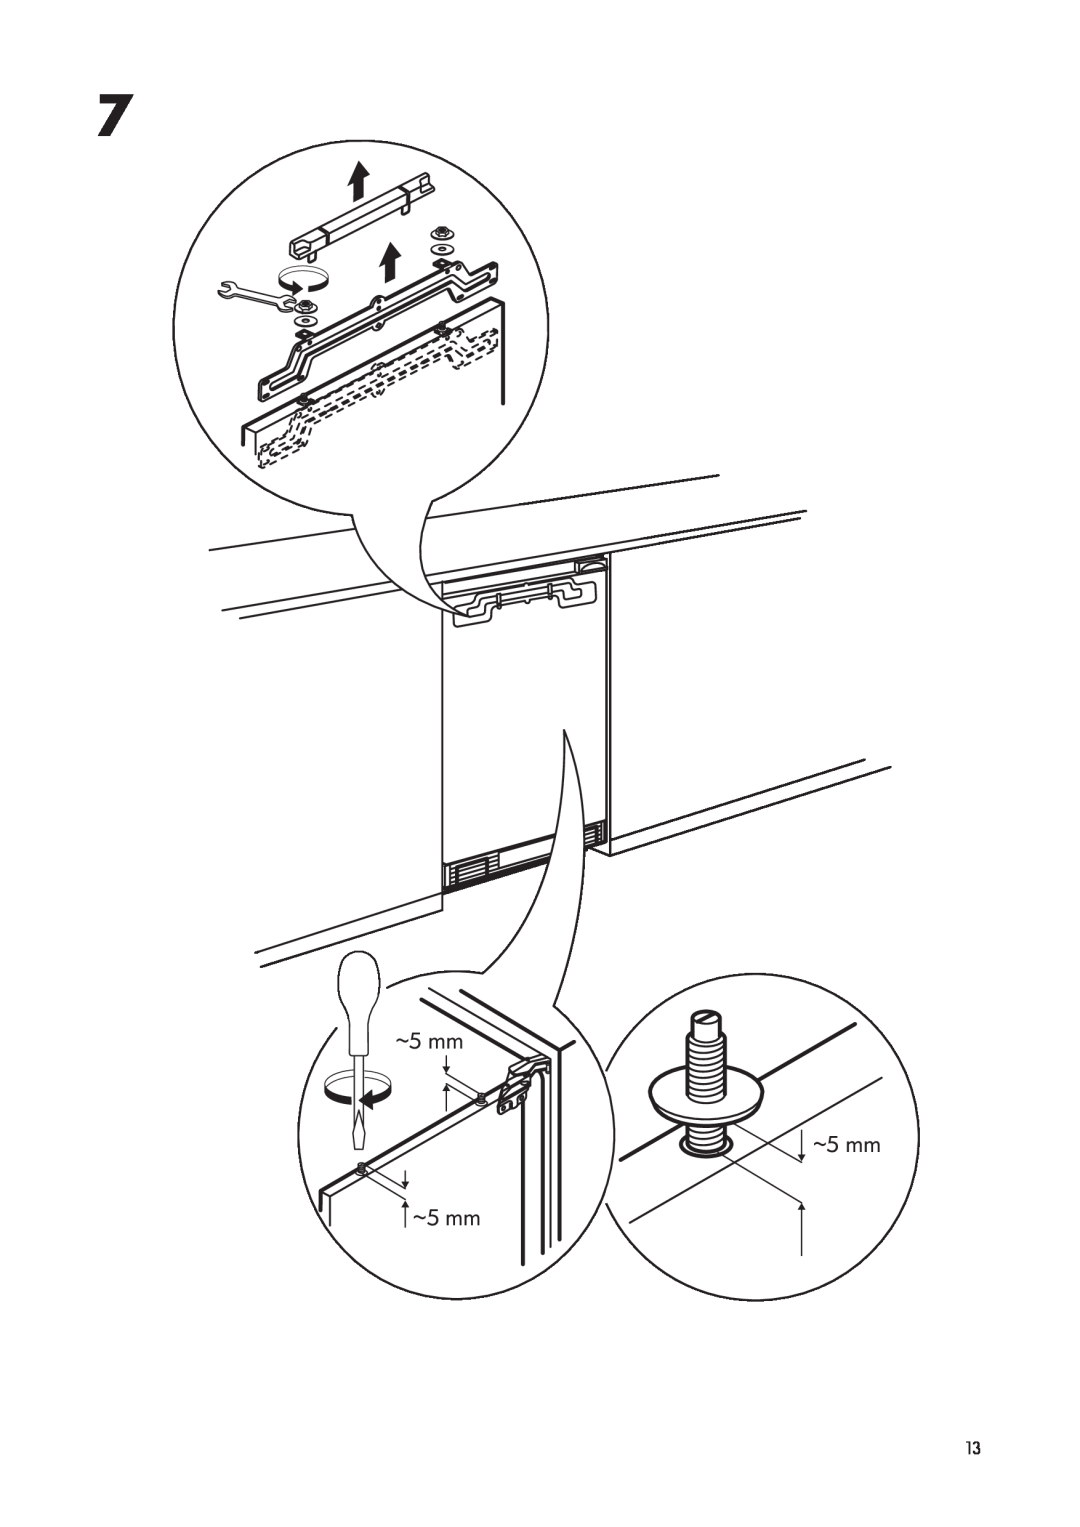 IKEA SF98 manual ~5 mm ~5 mm 